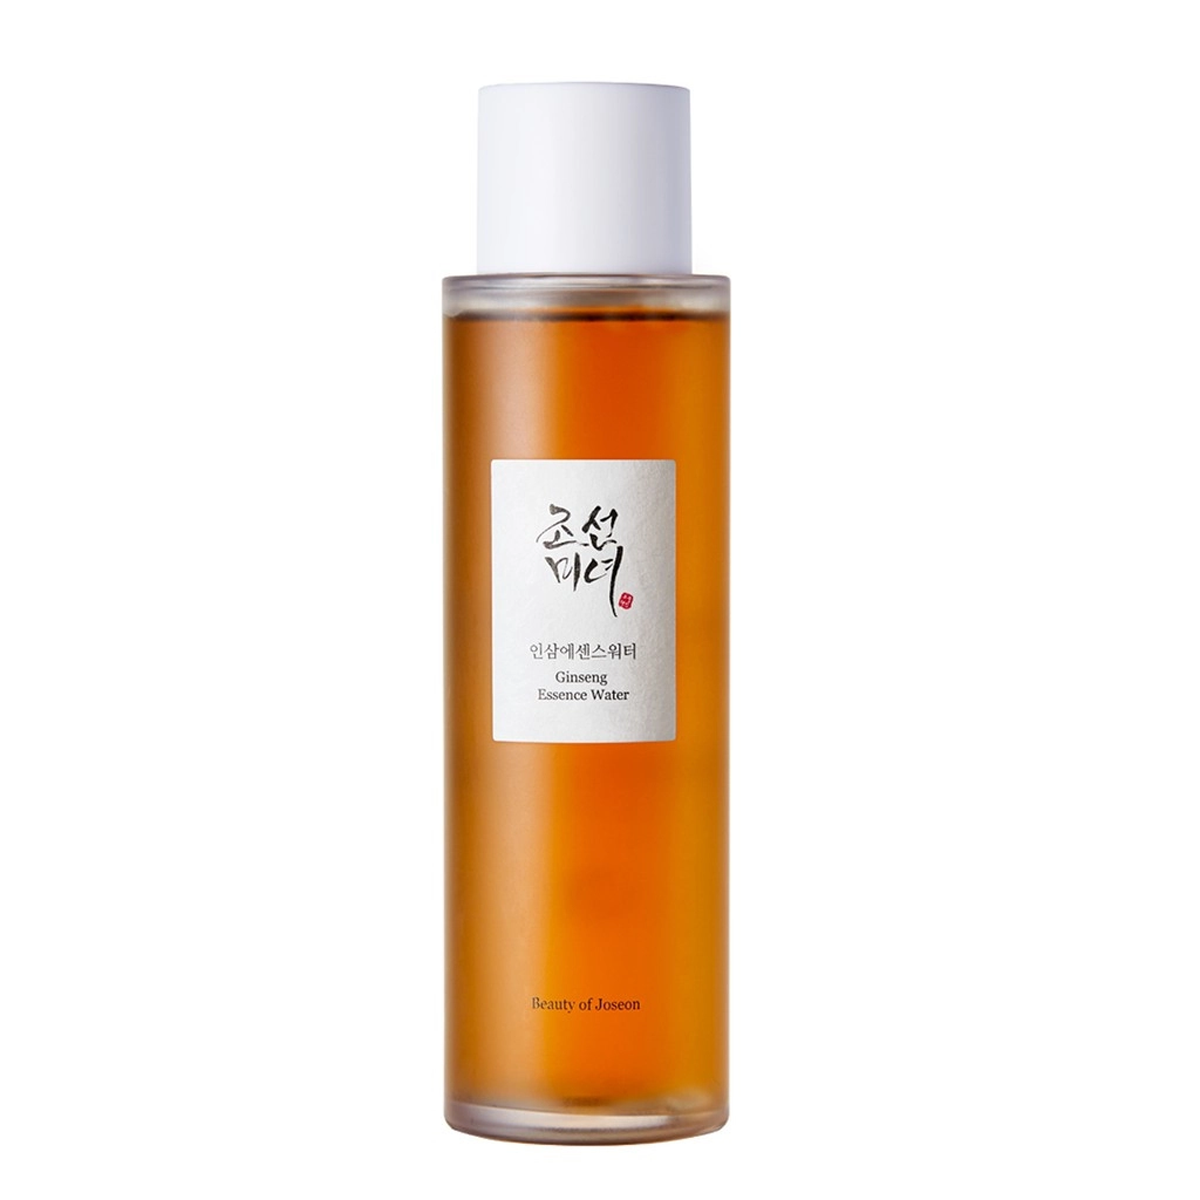 Beauty of Joseon - Ginseng Essence Water [150ml] |  Korean Hydrating Skincare |  Moisturizing Smooth Toner Comfort Hydrate Moisturizer Niacinamide